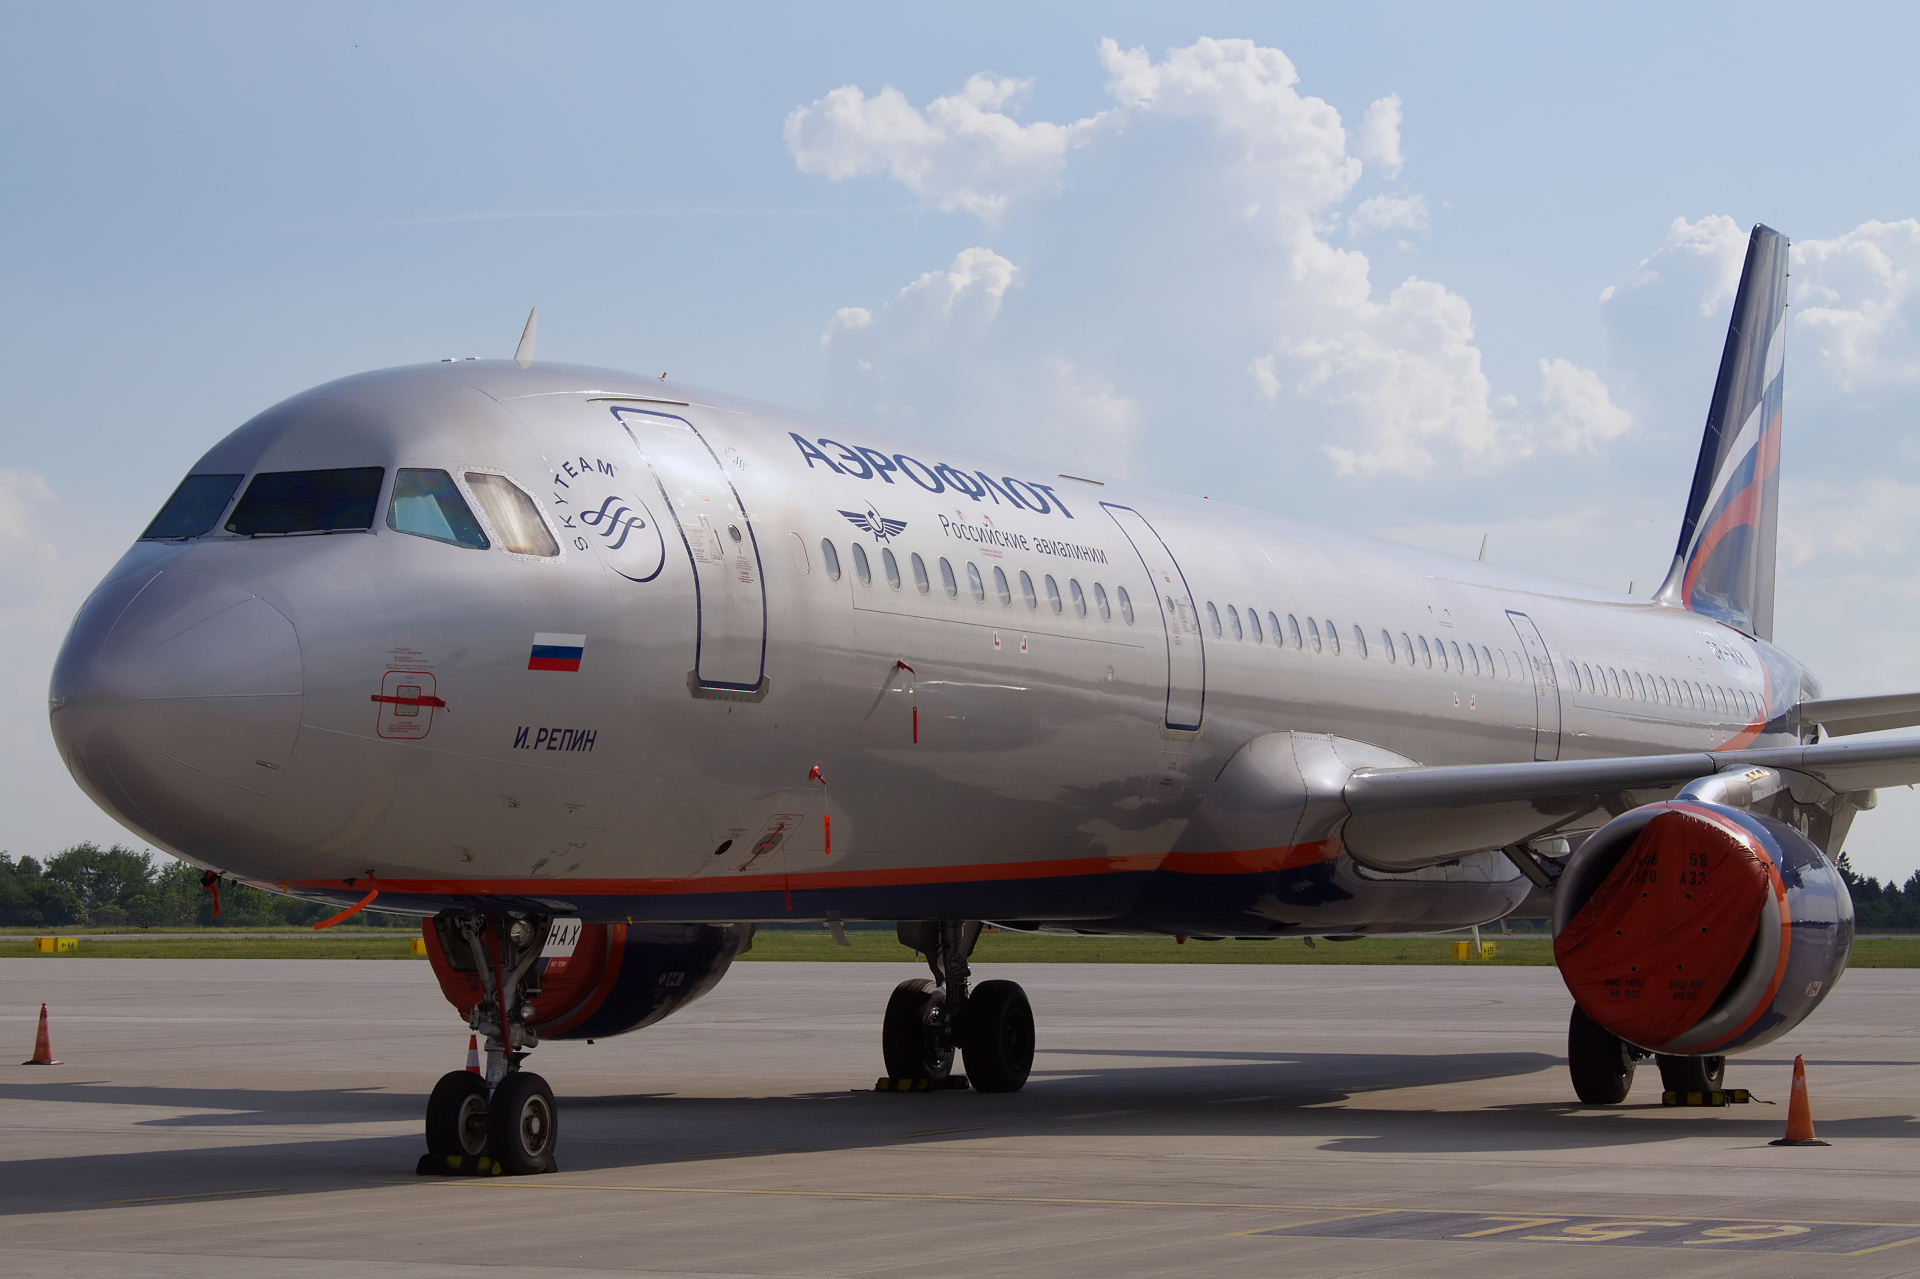 SP-HAX (Aeroflot) (Aircraft » EPWA Spotting » Airbus A321-200 » Small Planet Airlines Polska)